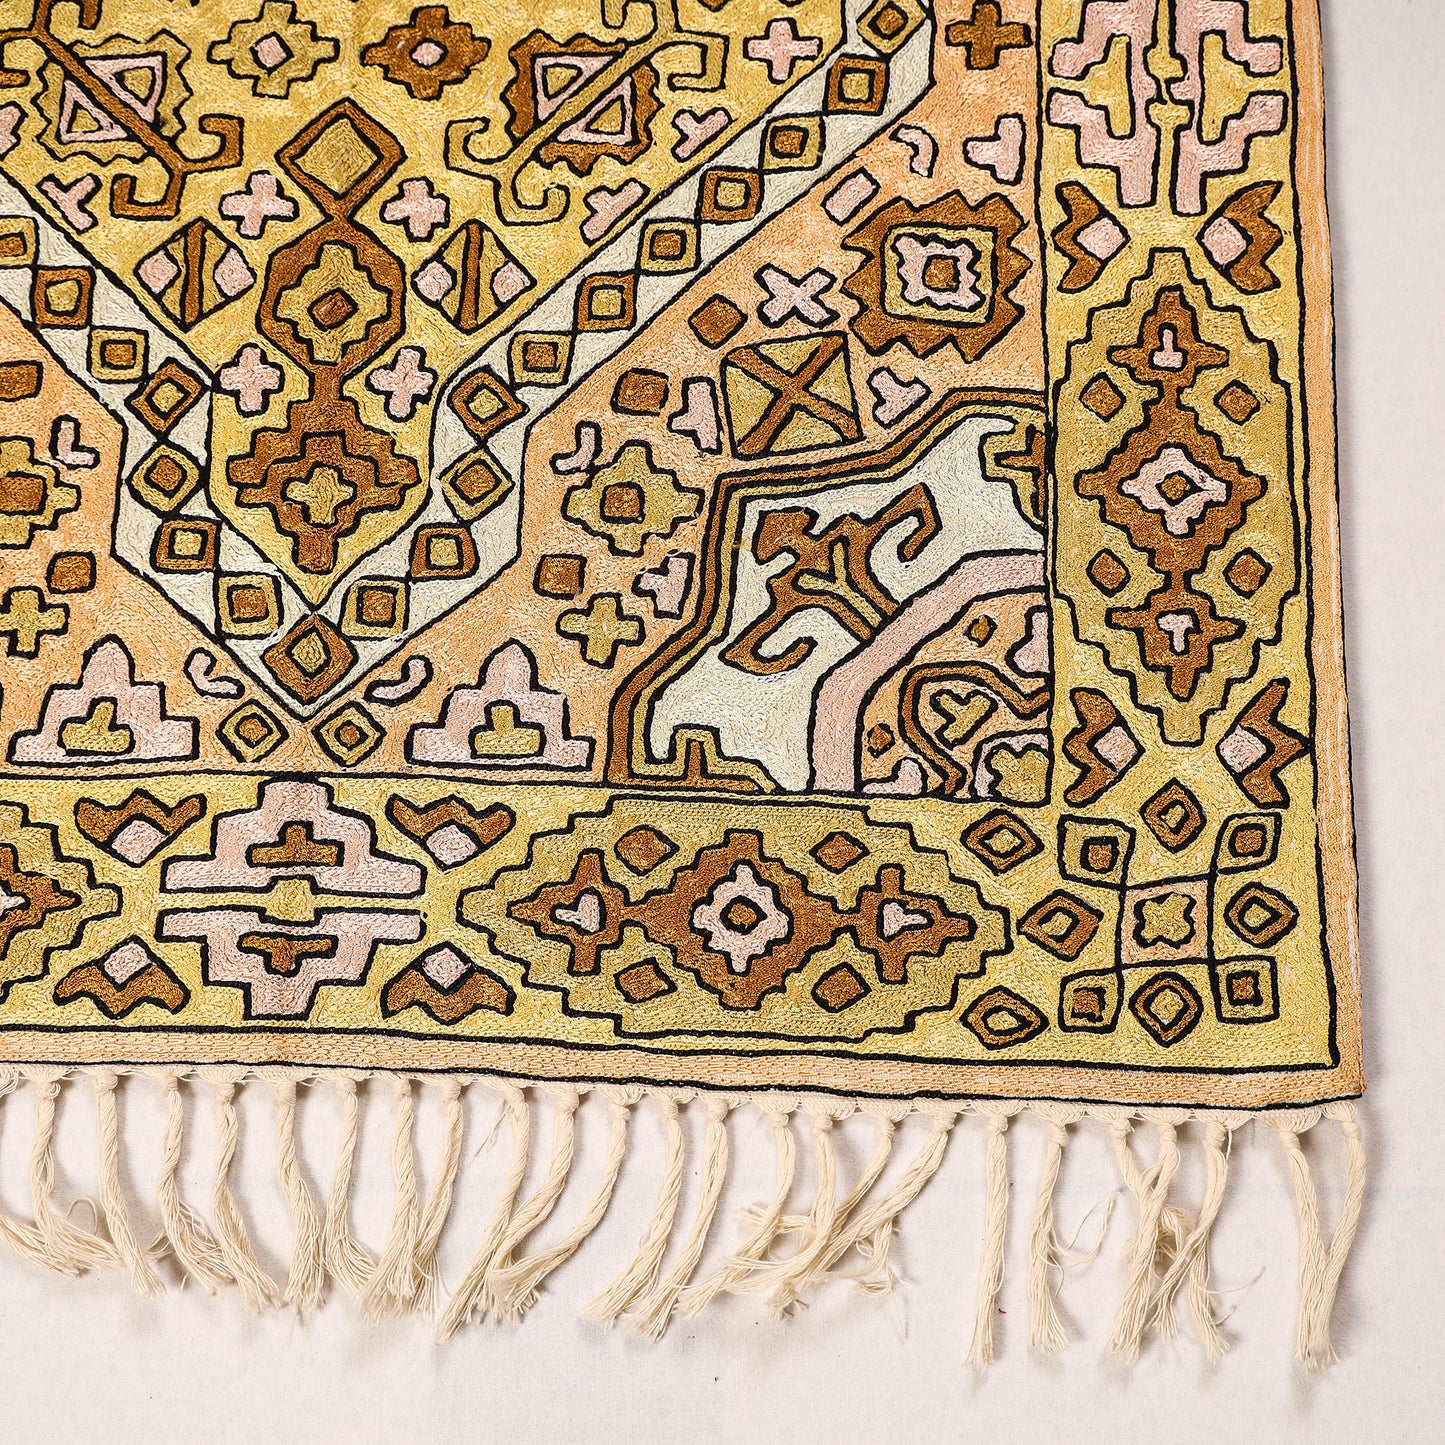 Original Chain Stitch Mulberry Silk Thread Hand Embroidery Rug / Carpet (46 x 29 in)